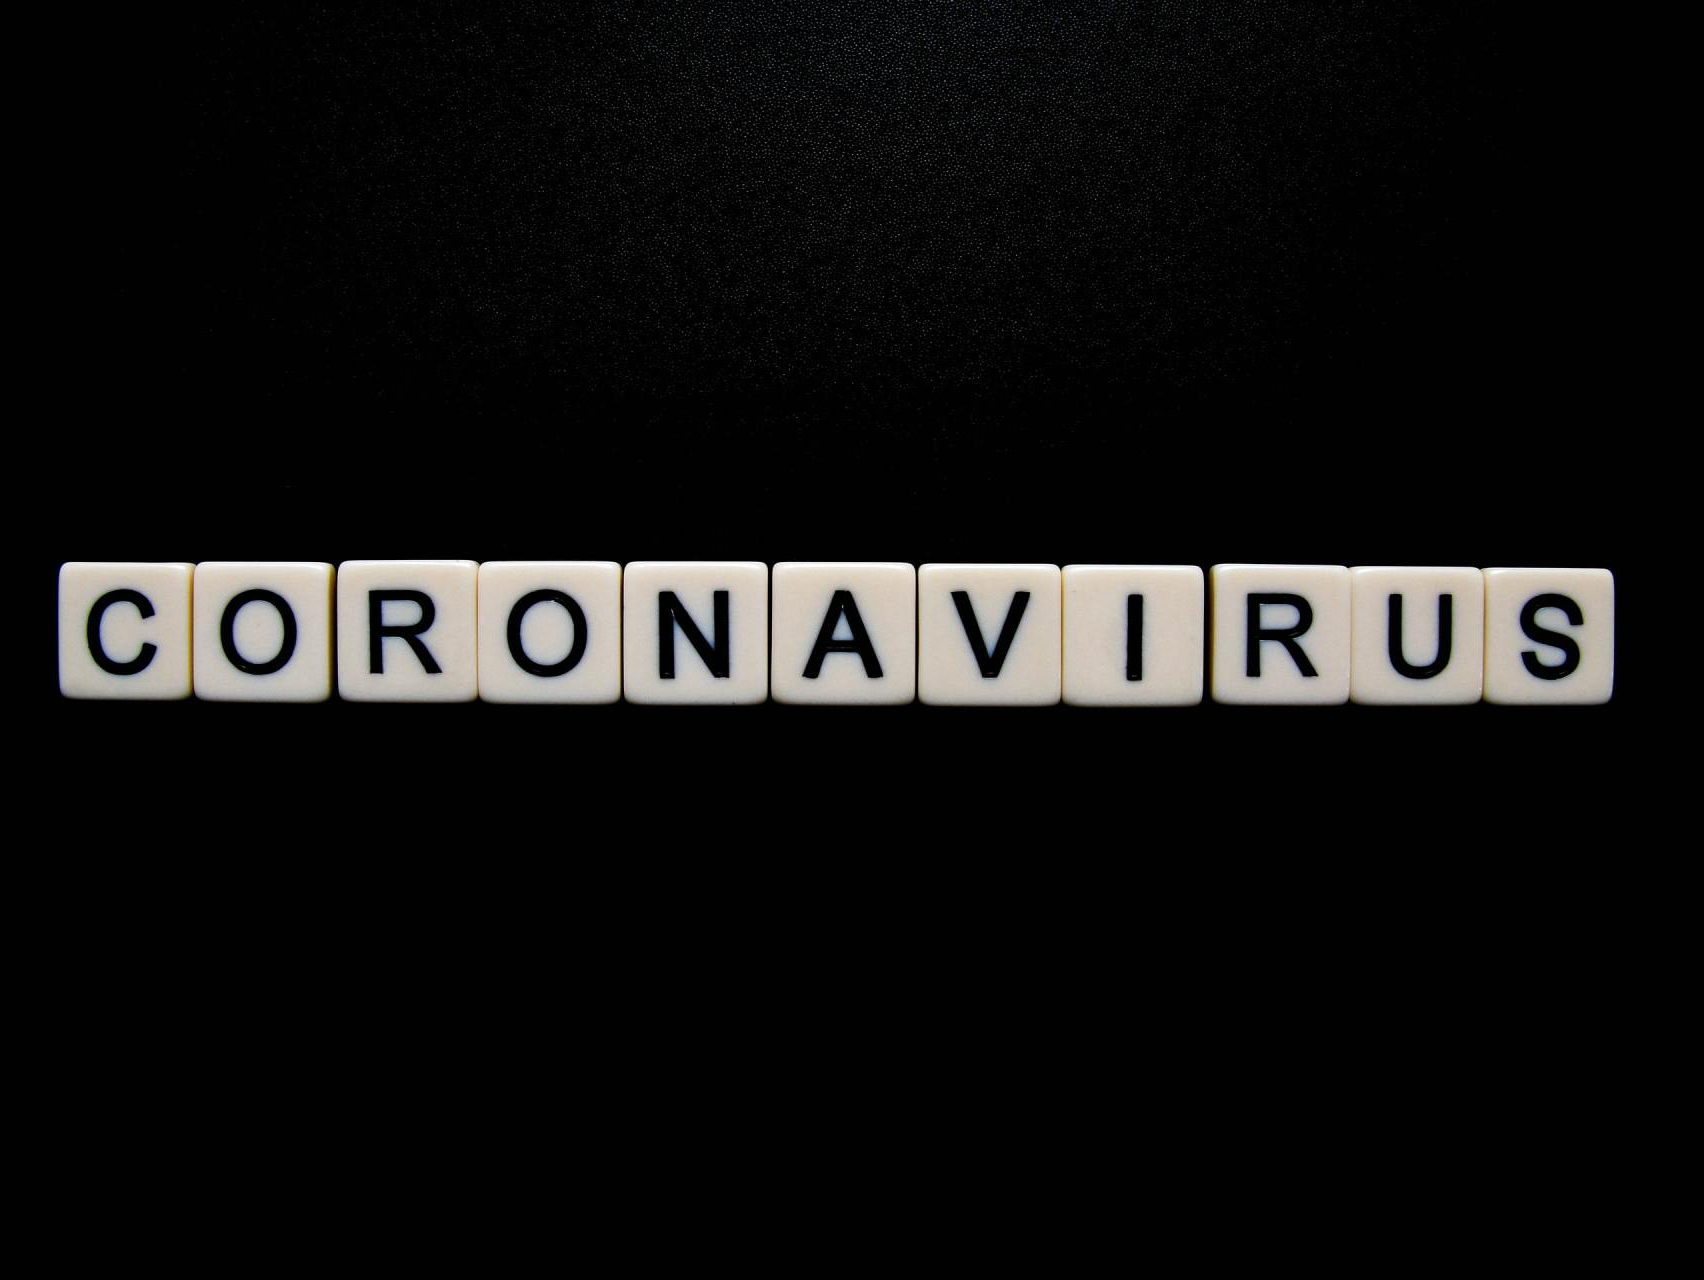 Coronavirus spelled on a shuffleboard